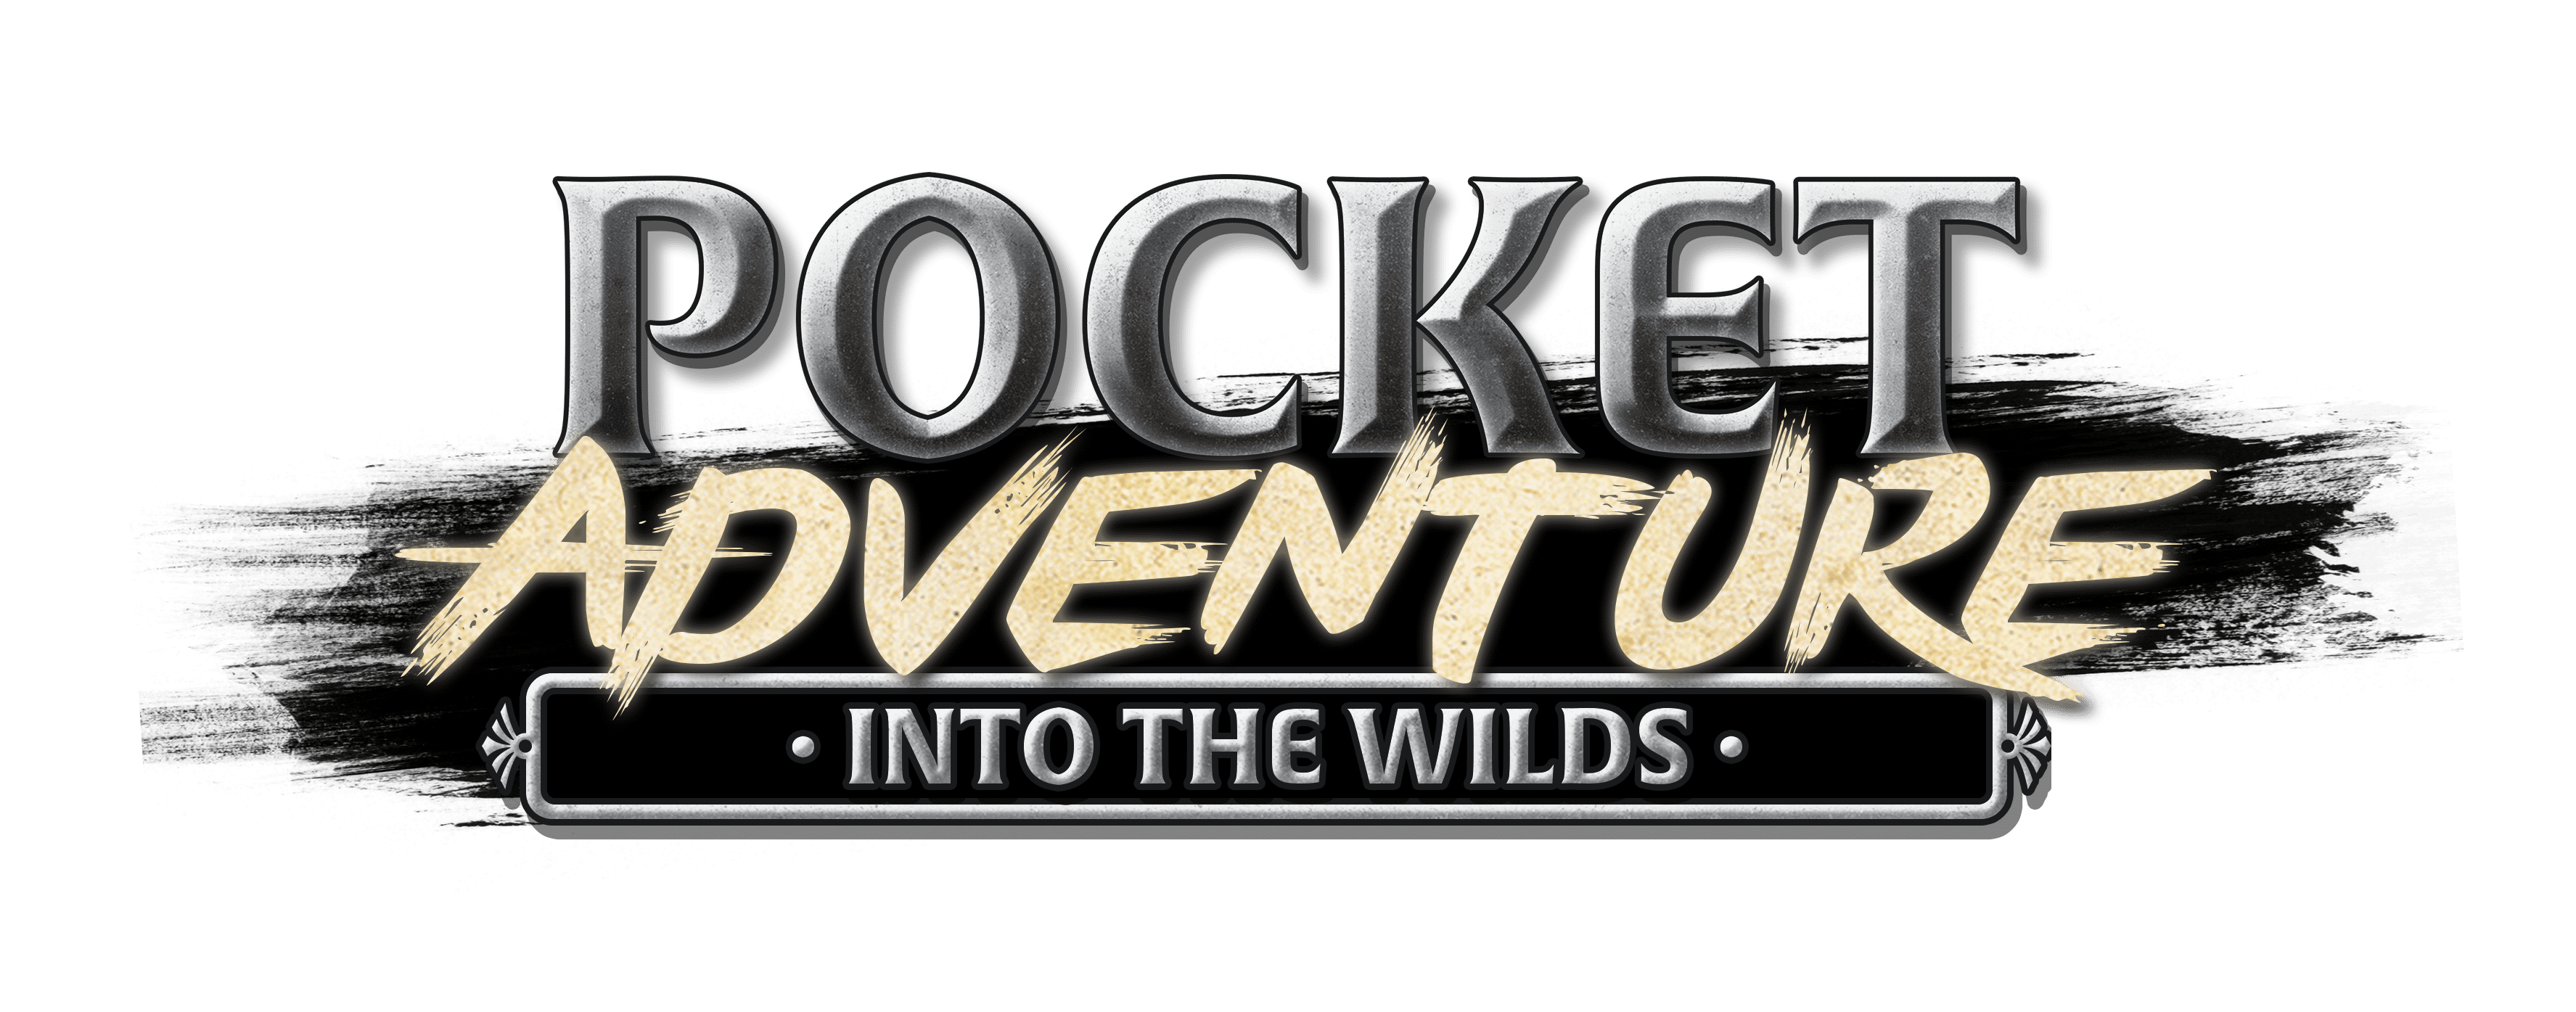 Pocket Adventure